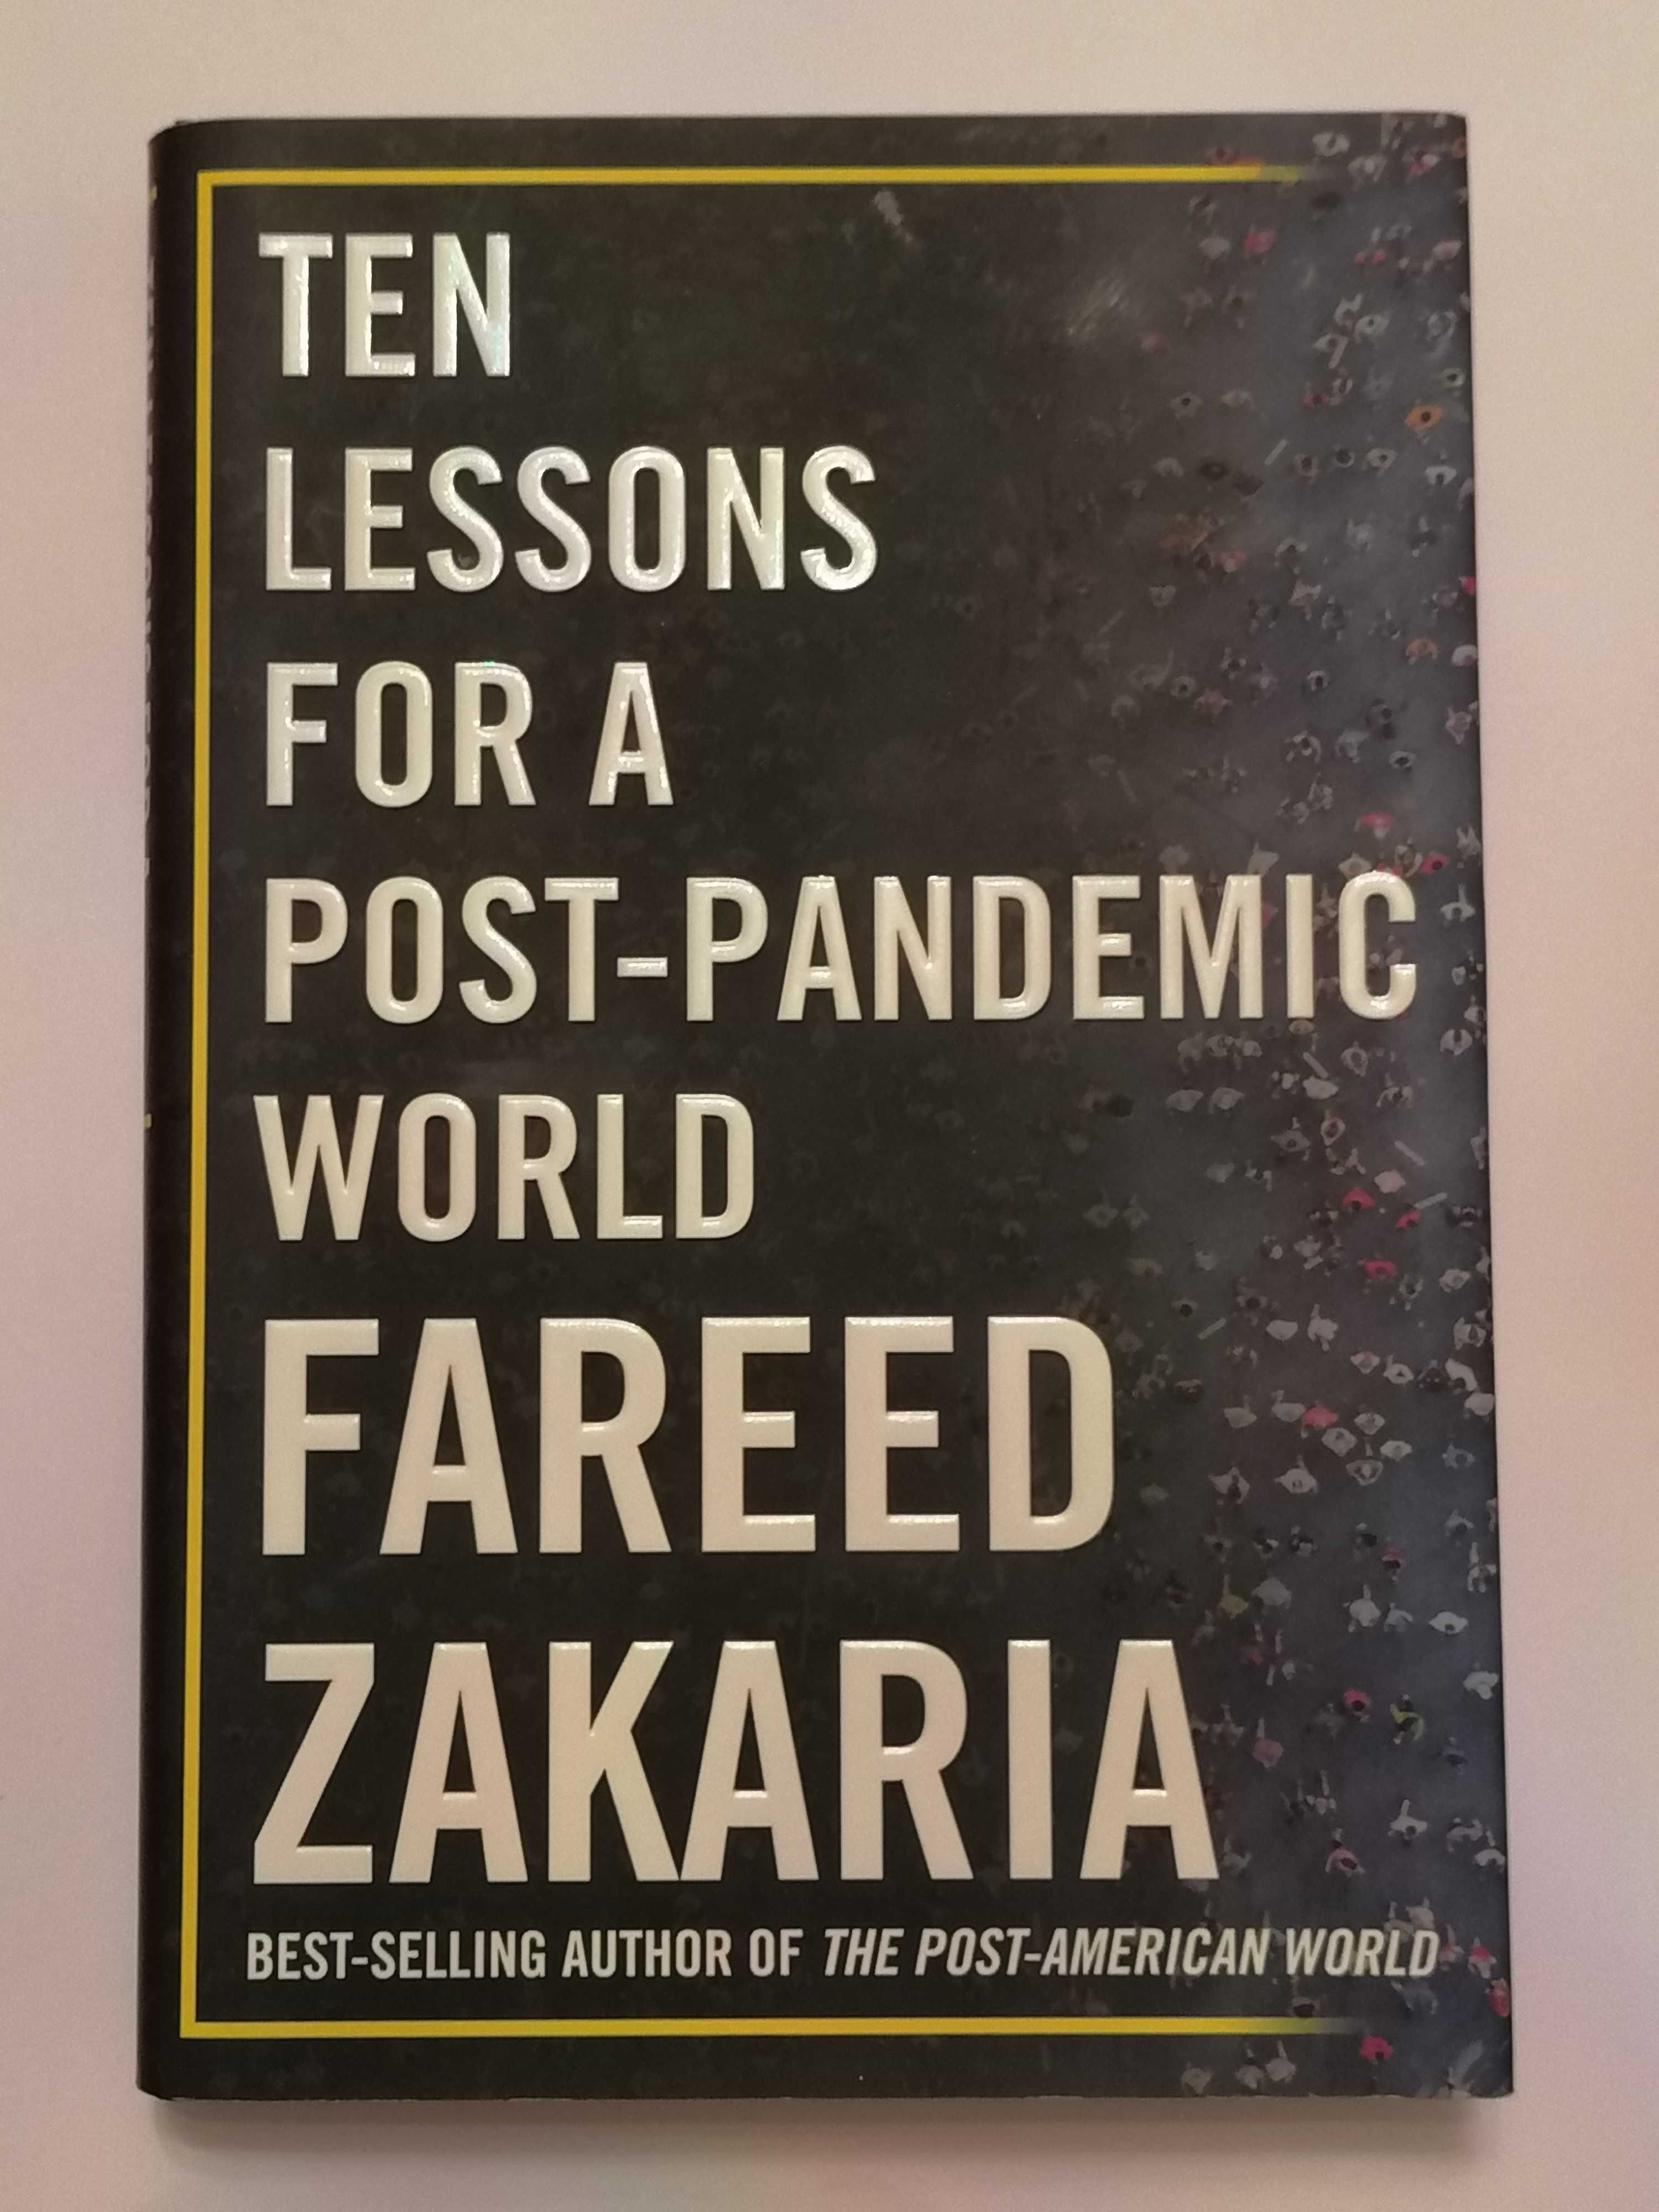 Livro Ten lessos for a post-pandemic world, Fareed Zakaria